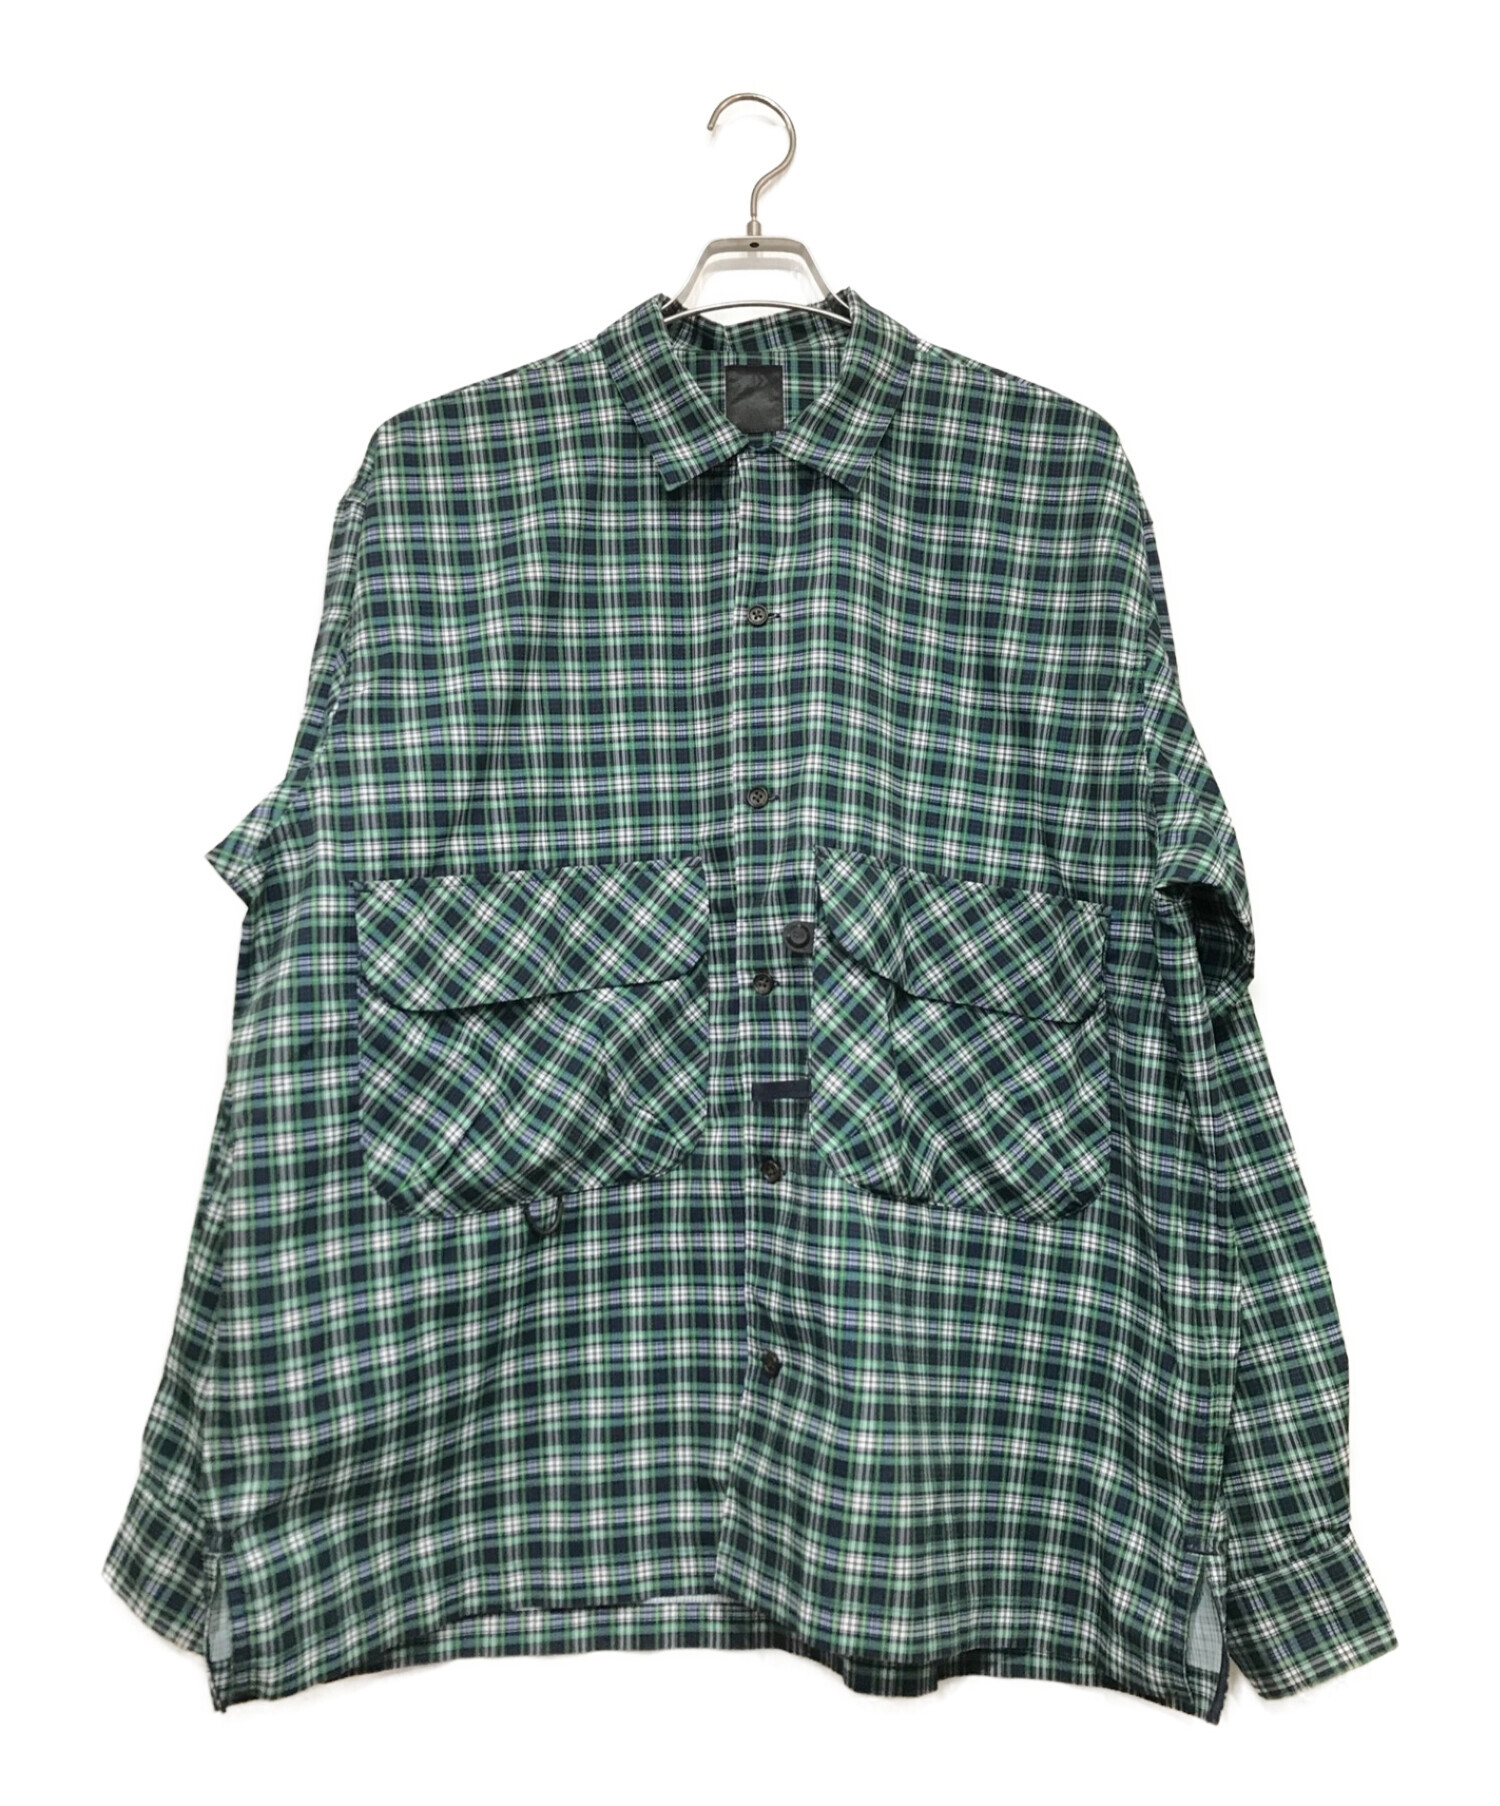 DAIWA PIER39 (ダイワ ピア39) Tech New Anglers Open Collar Shirts L/S 長袖シャツ  グリーン×ネイビー サイズ:SIZE L